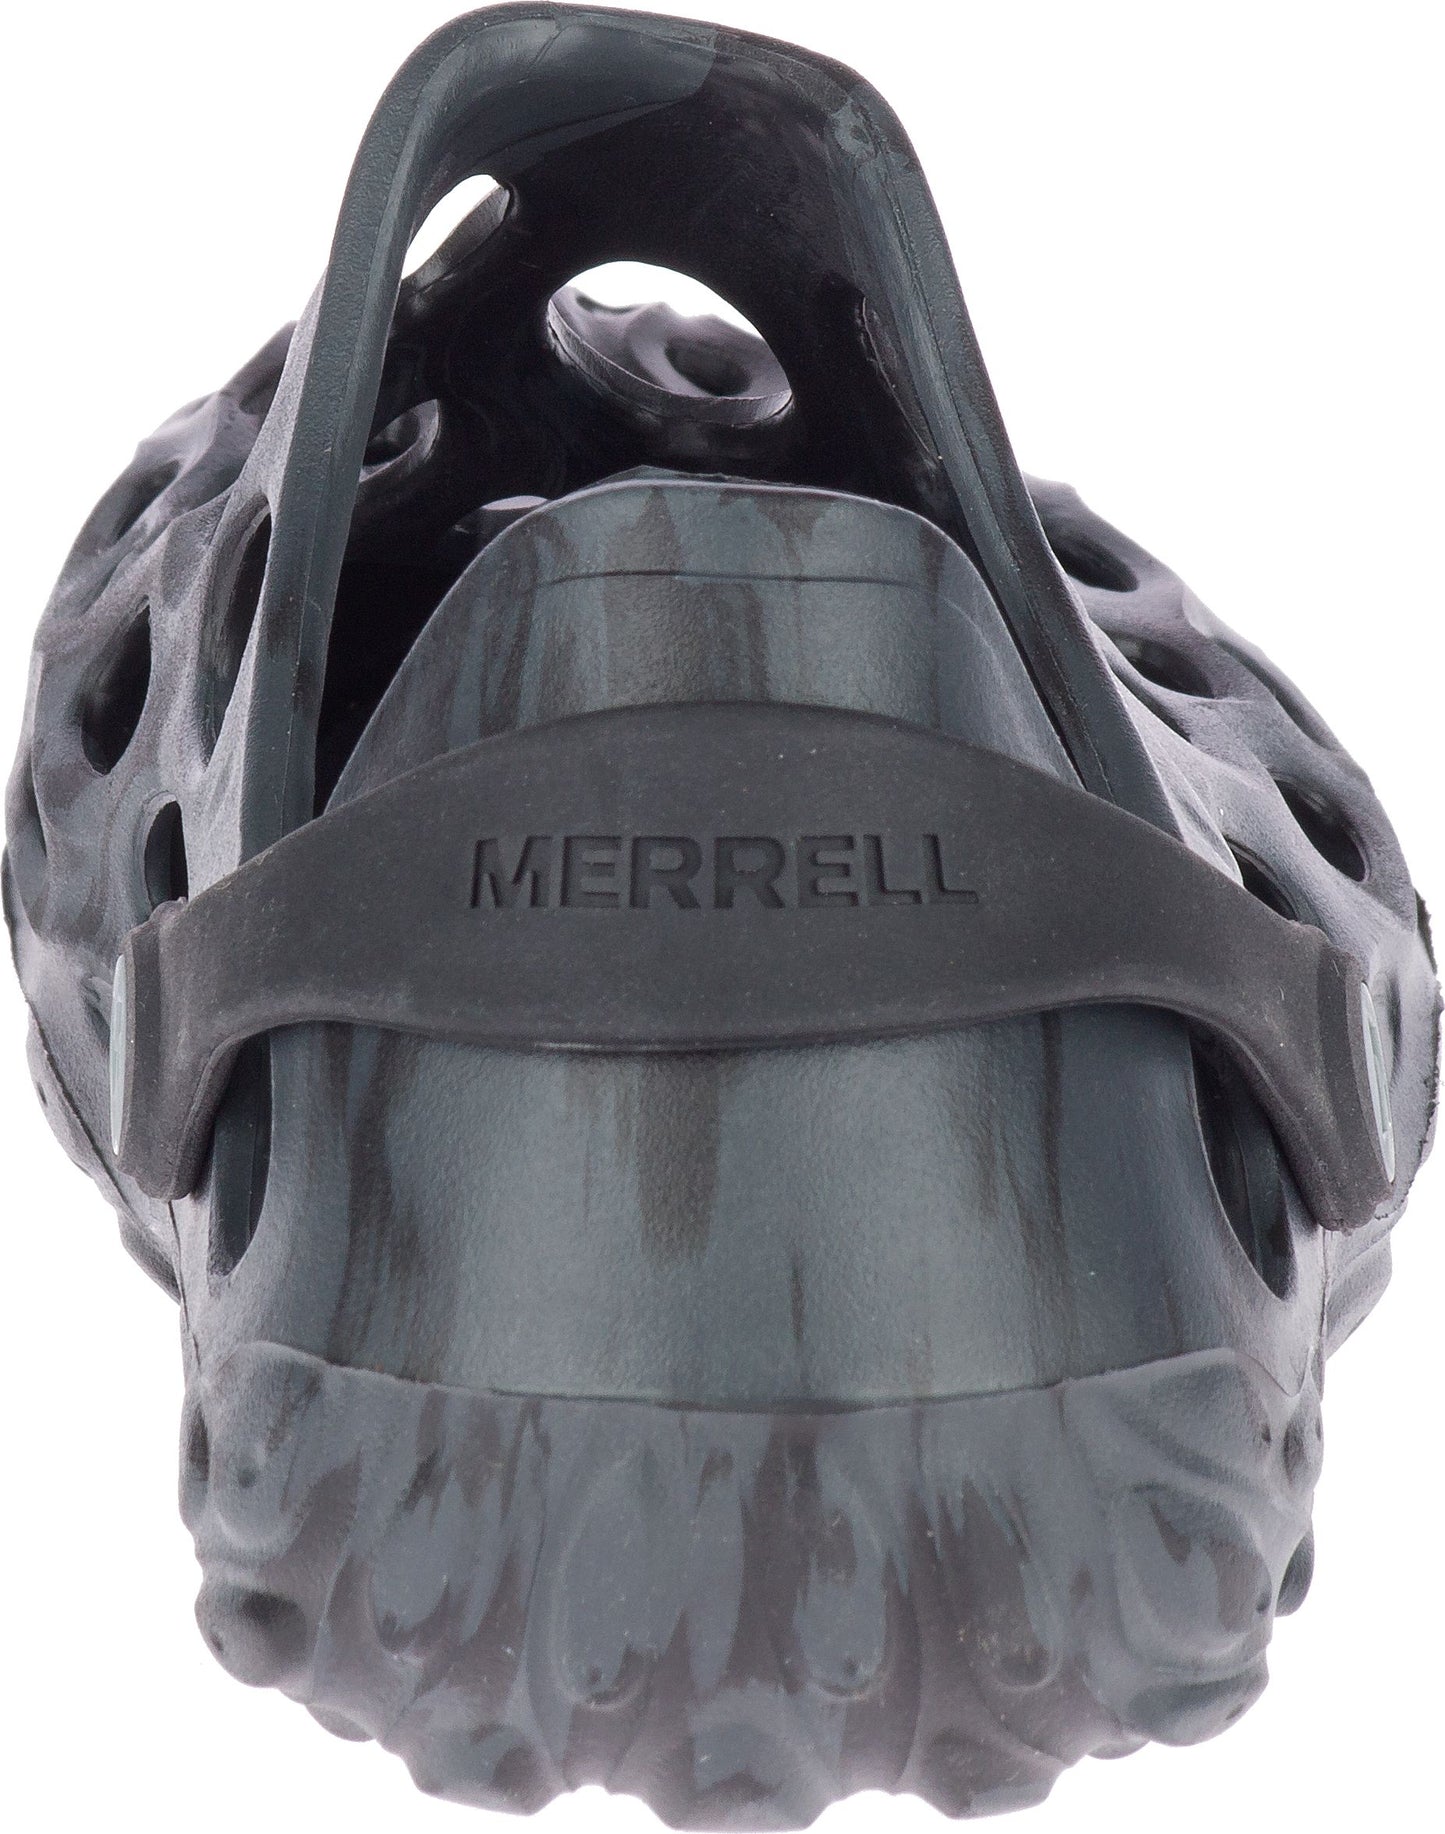 Merrell Sandals Ladies Hydro Moc Black